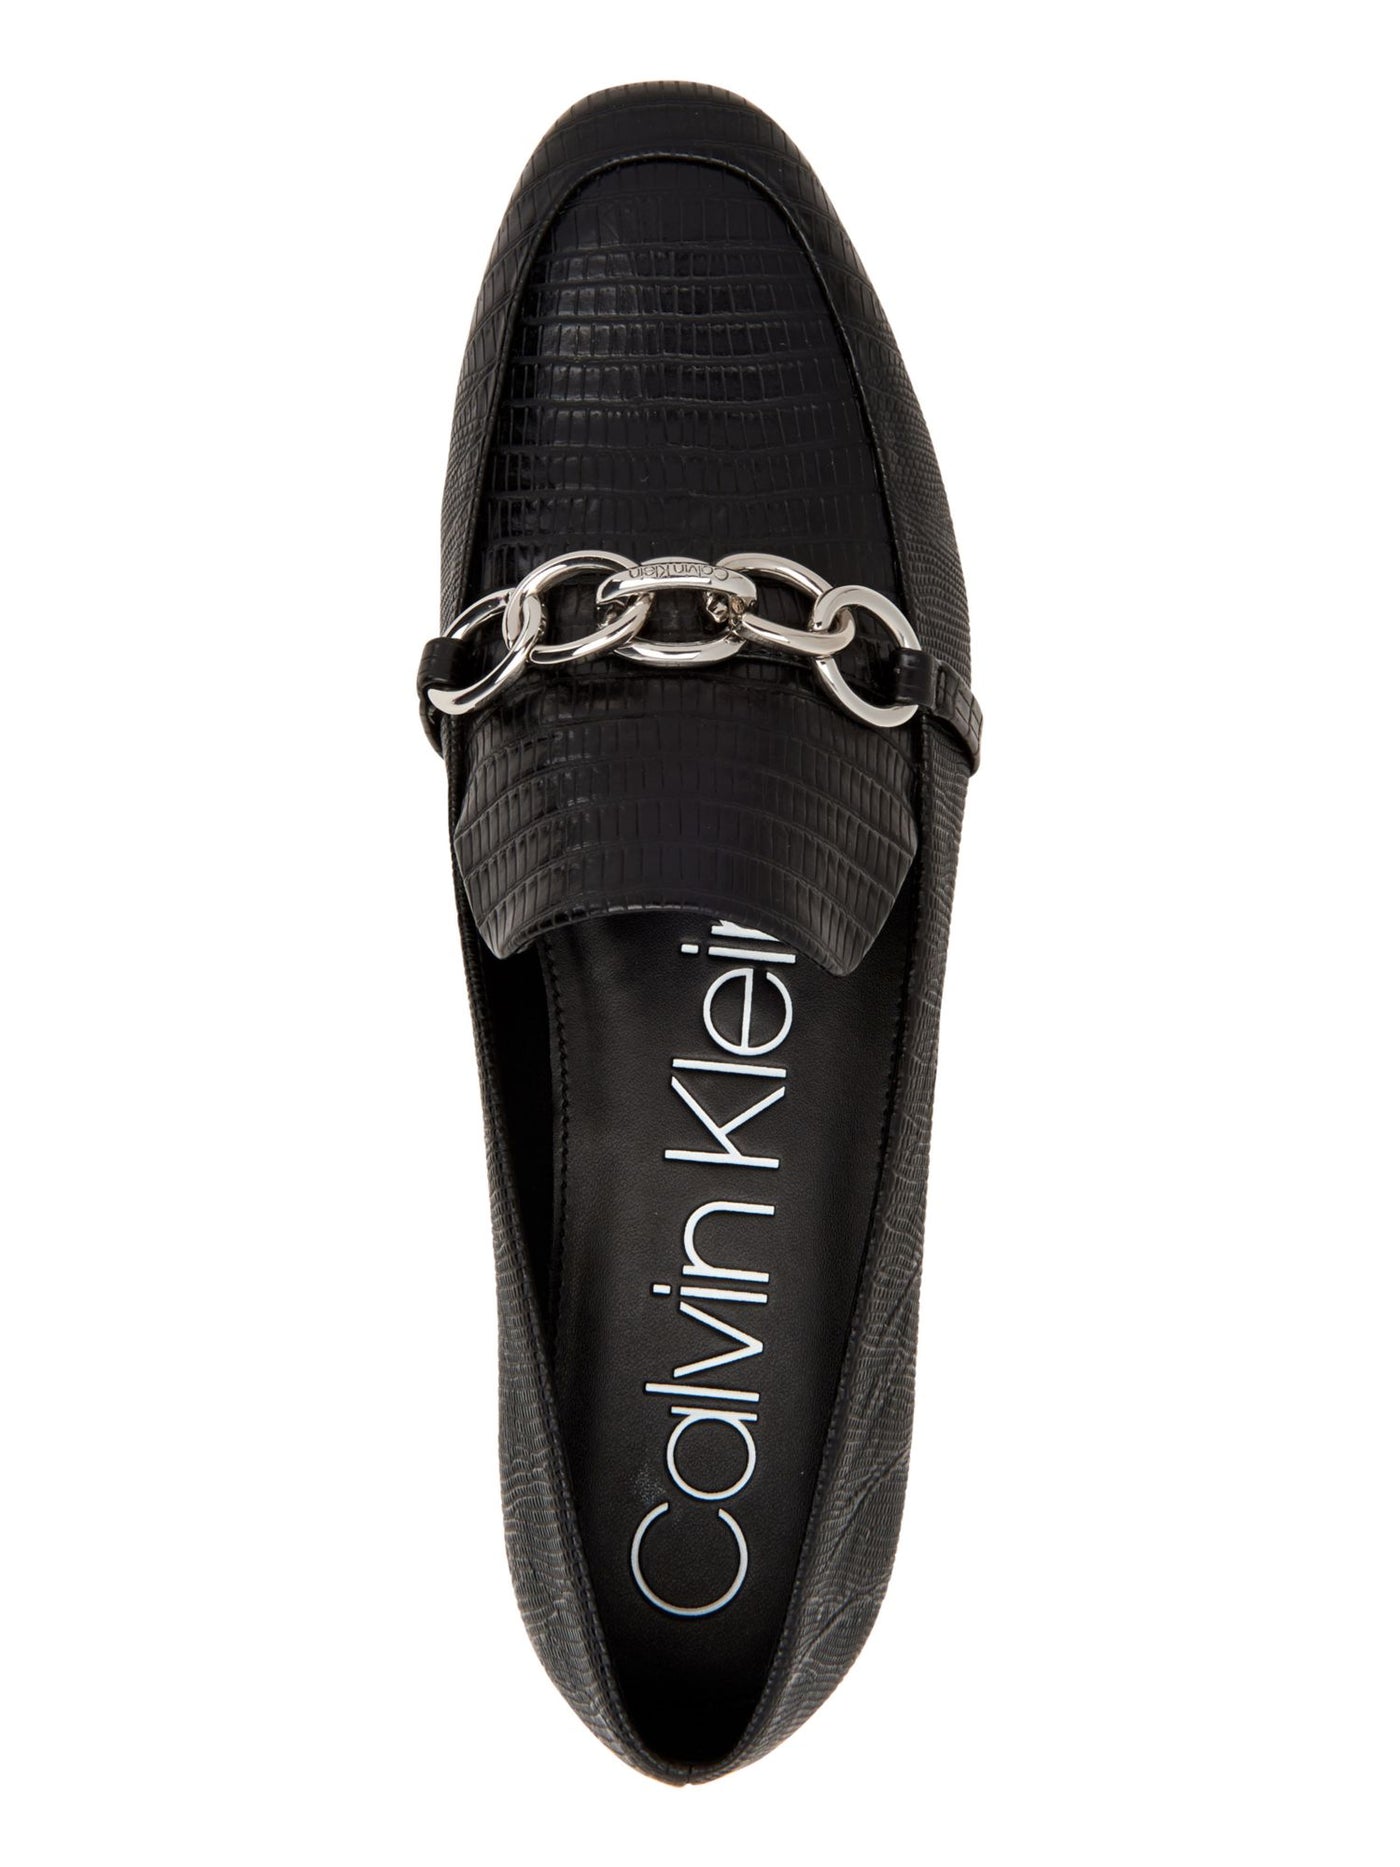 CALVIN KLEIN Womens Black Lizard Print Chain Link Accent Comfort Logo Banda Almond Toe Wedge Slip On Loafers Shoes 7.5